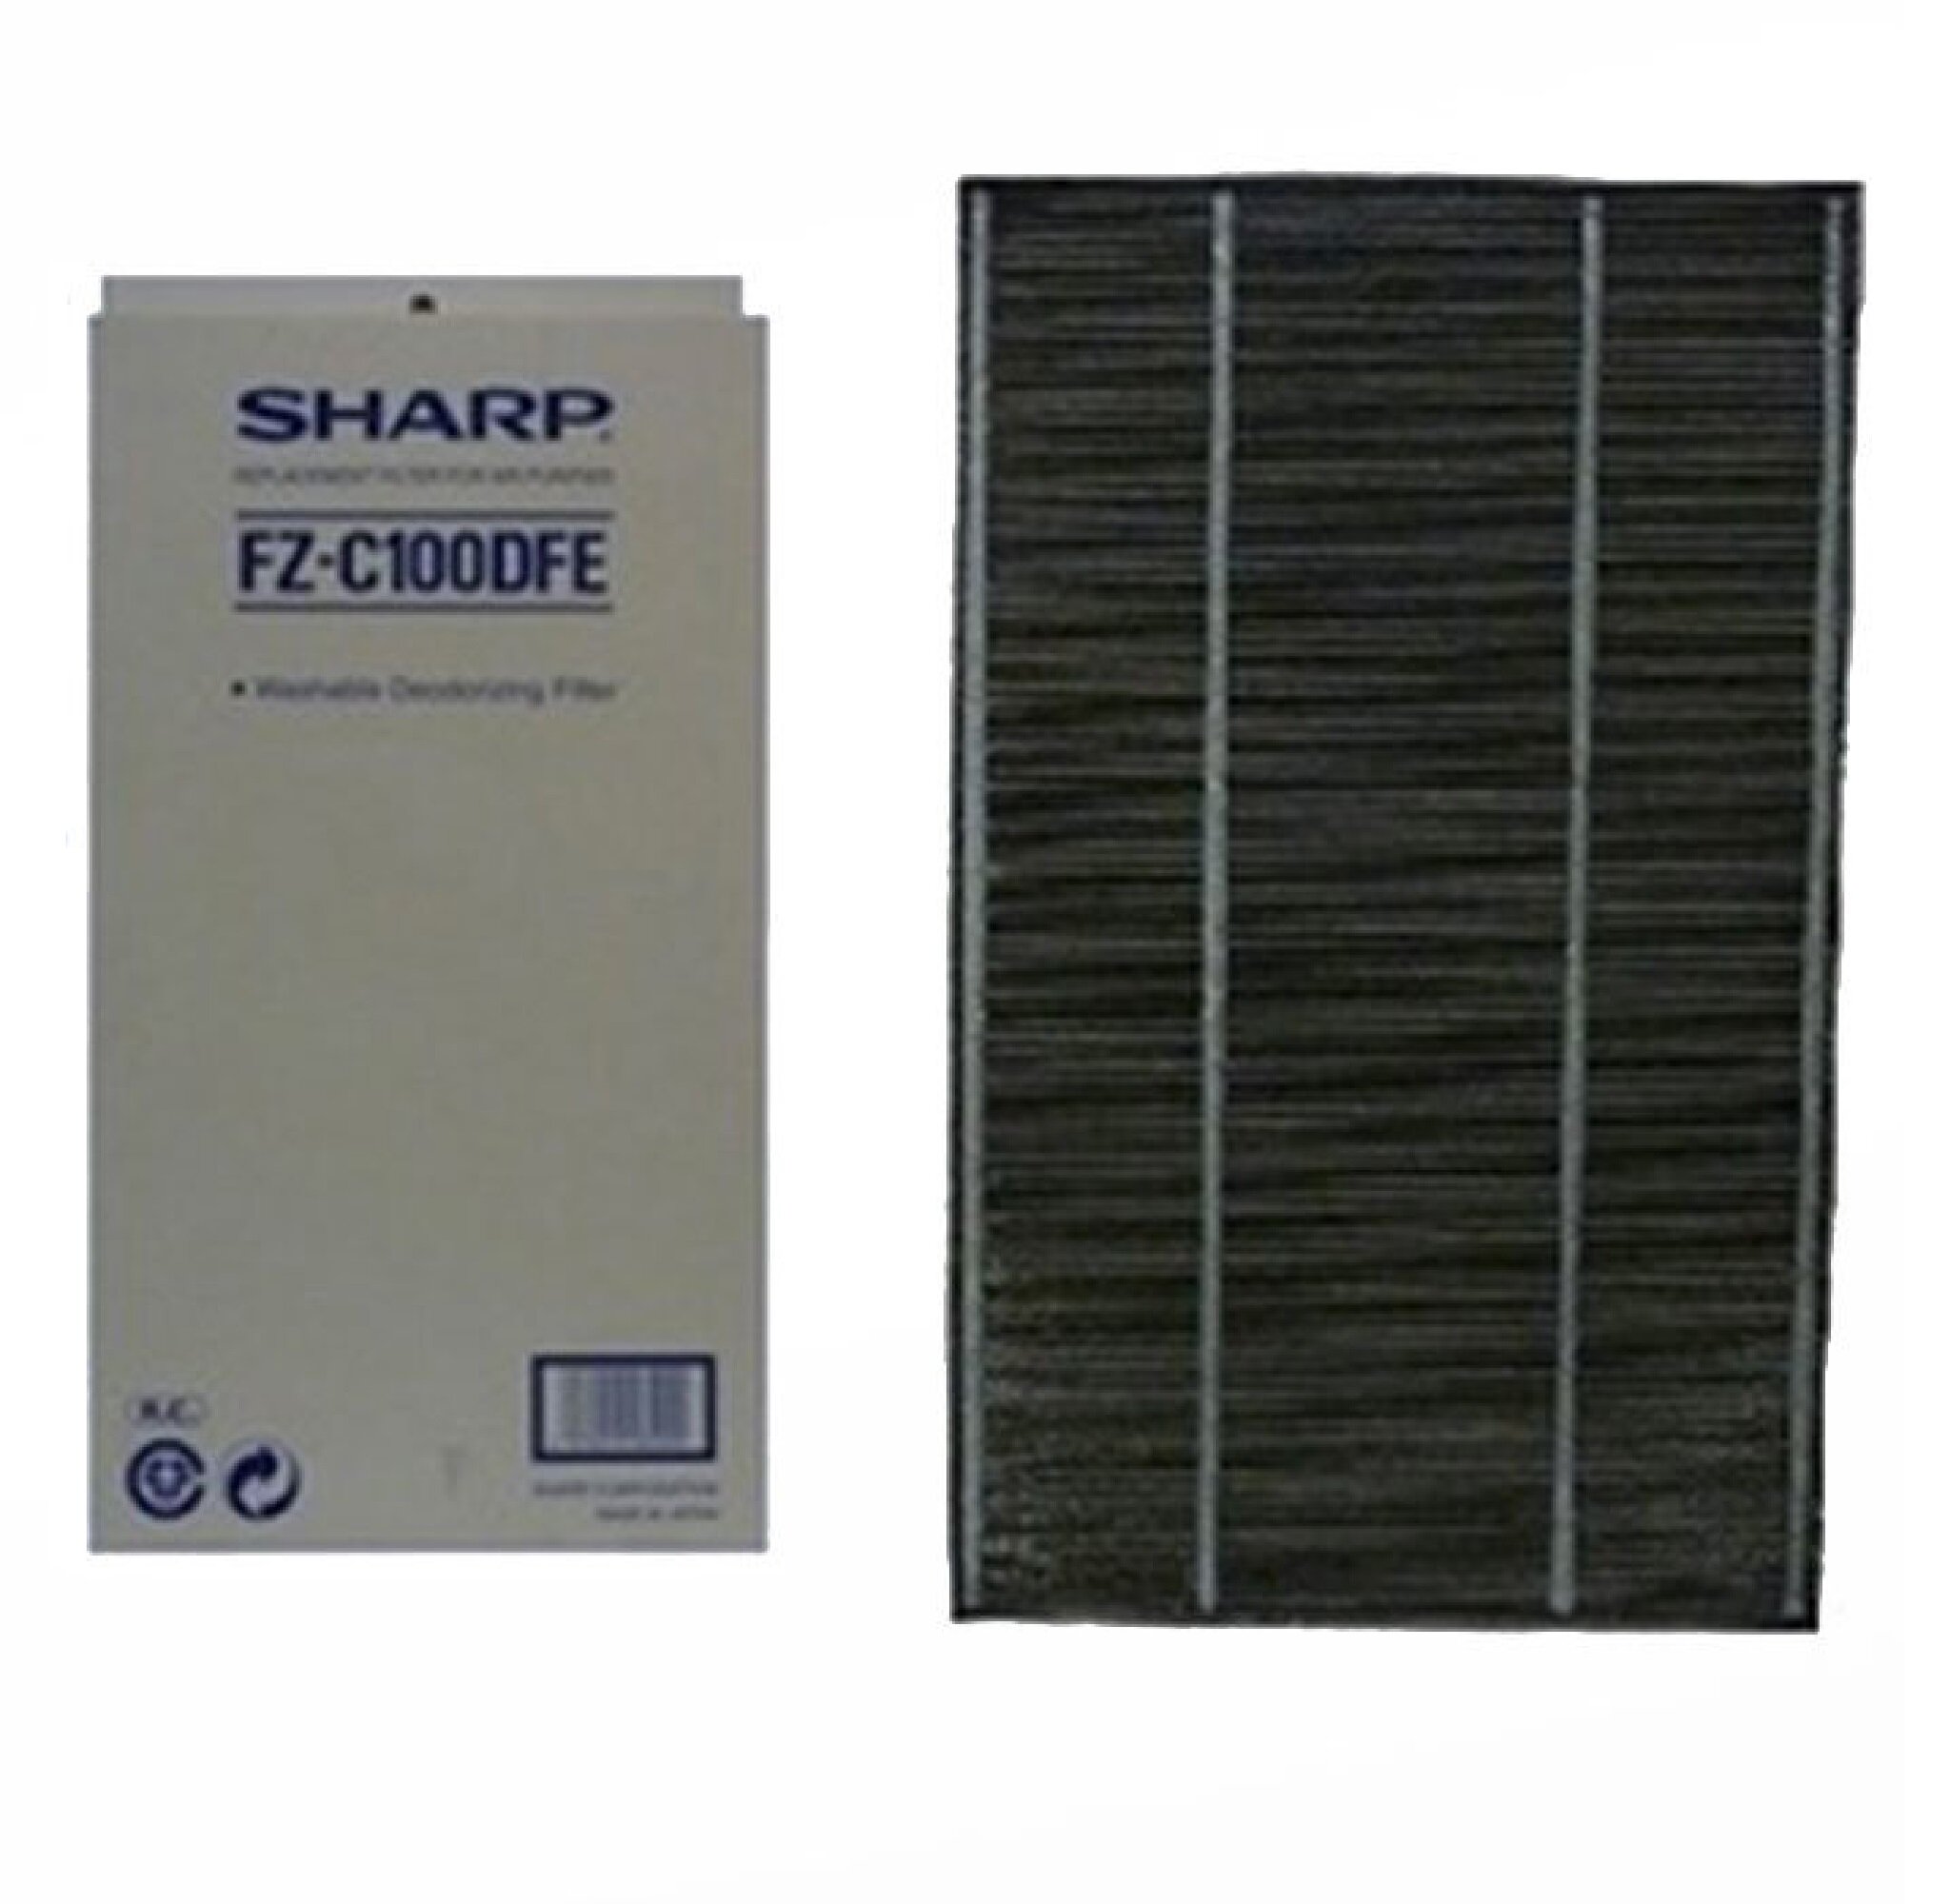     Sharp   Sharp FZ-C100DFE   